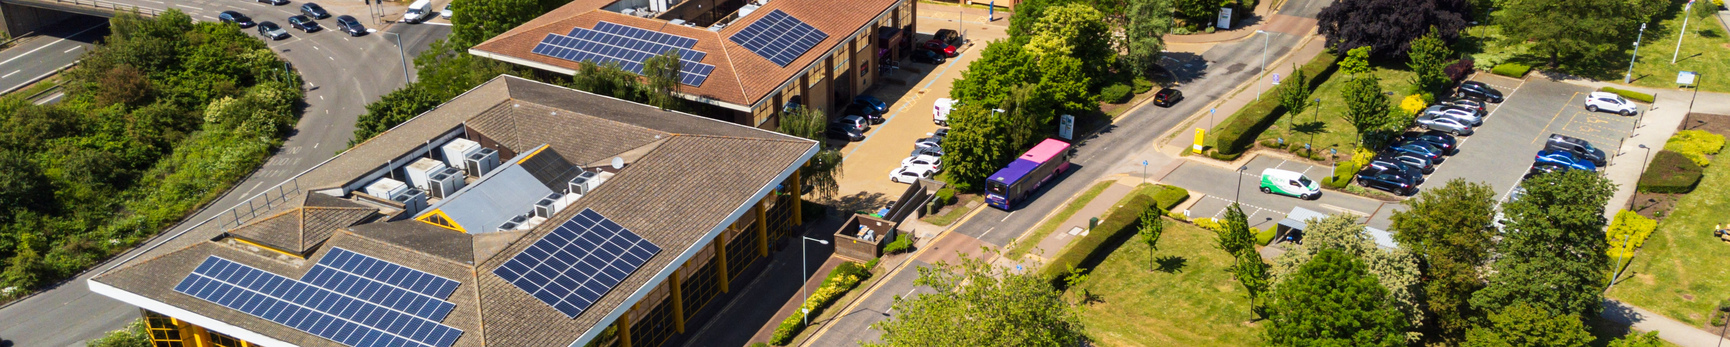 Herts campus solar panels aerial photo